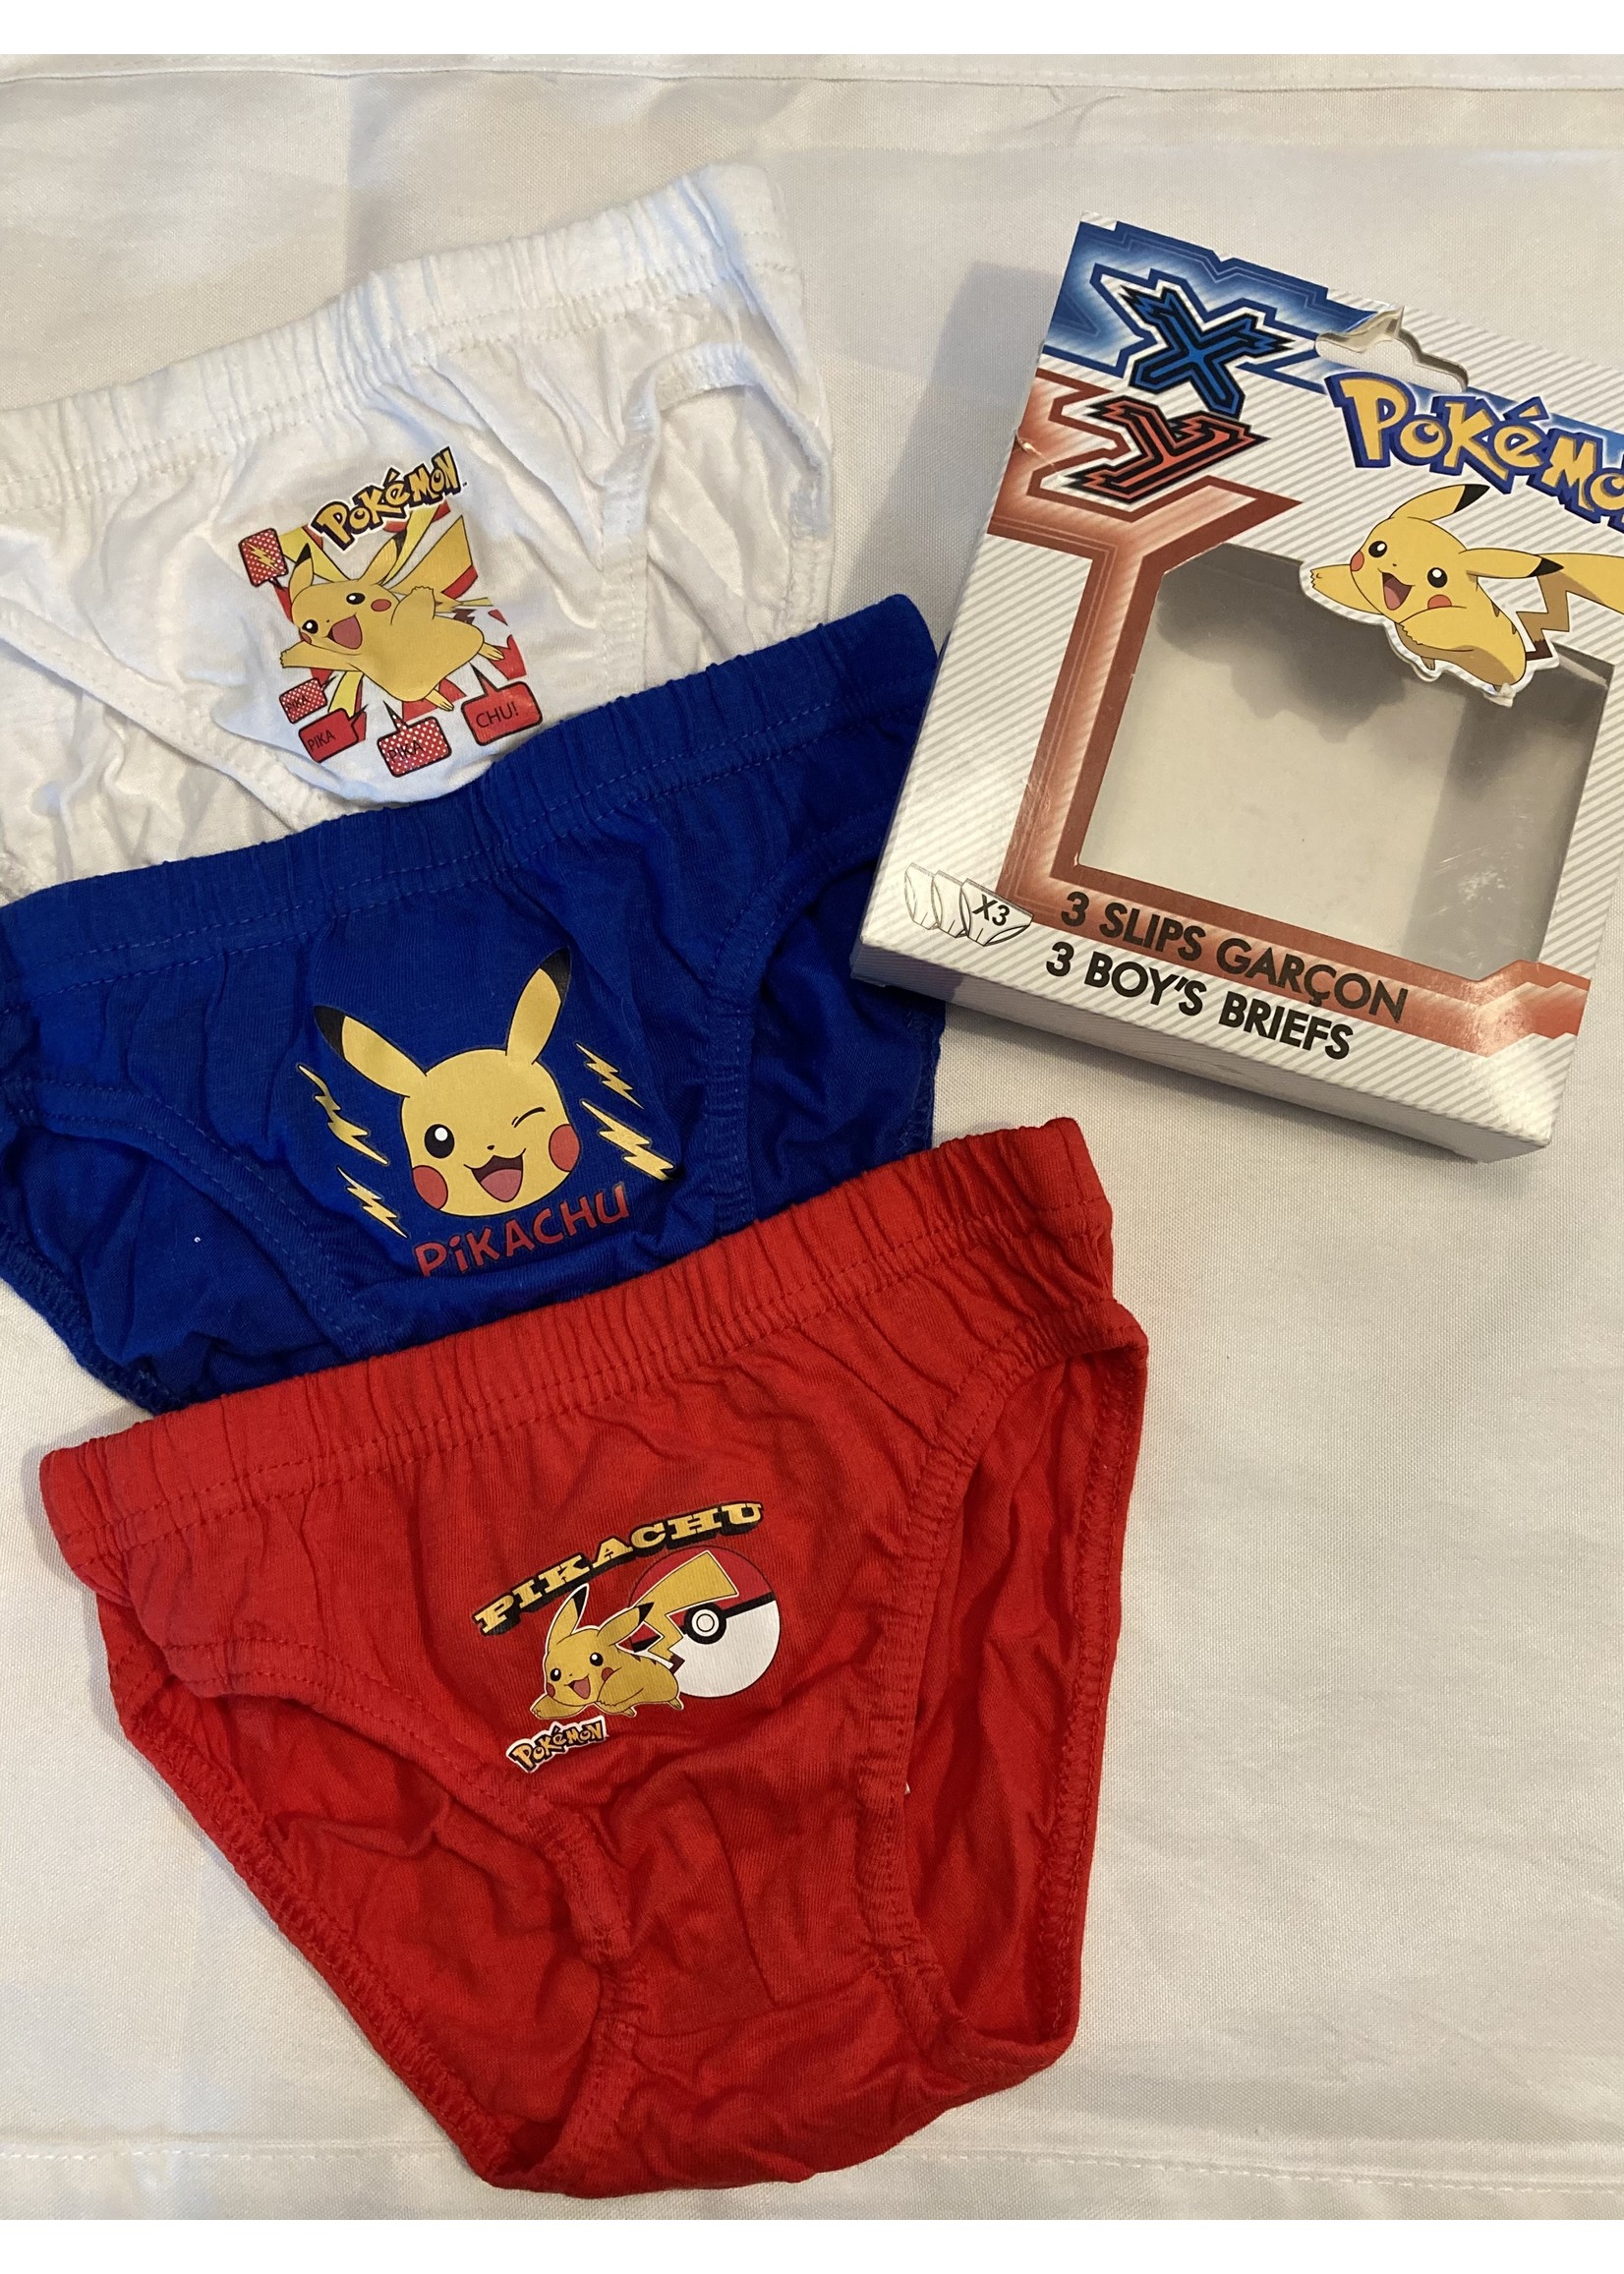 Pokemom Pokemon Pikachu briefs 3 pack